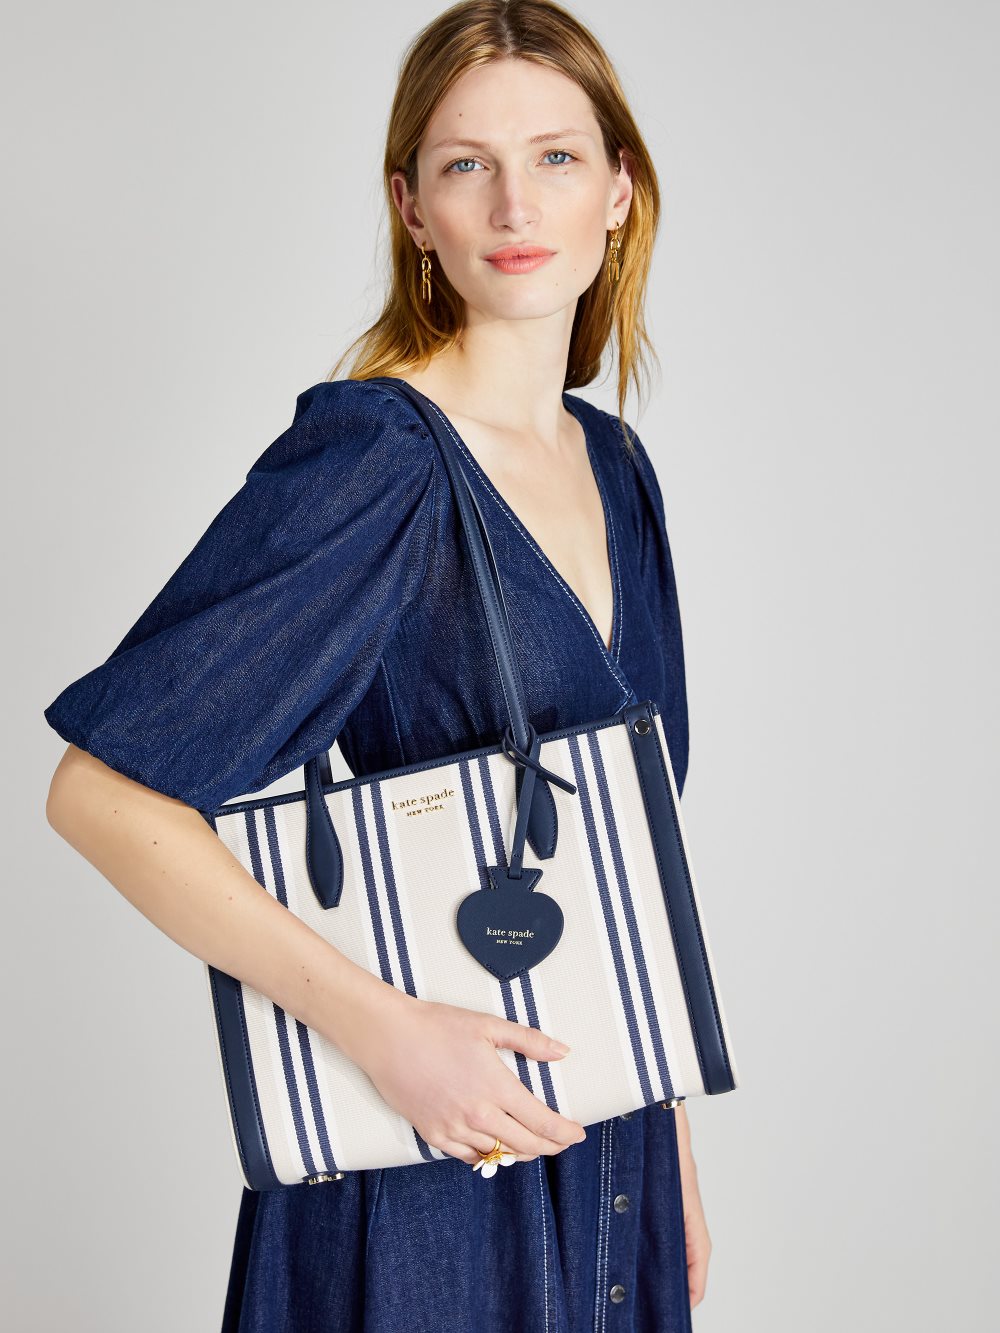 Women's blazer blue multi market striped canvas medium tote | Kate Spade